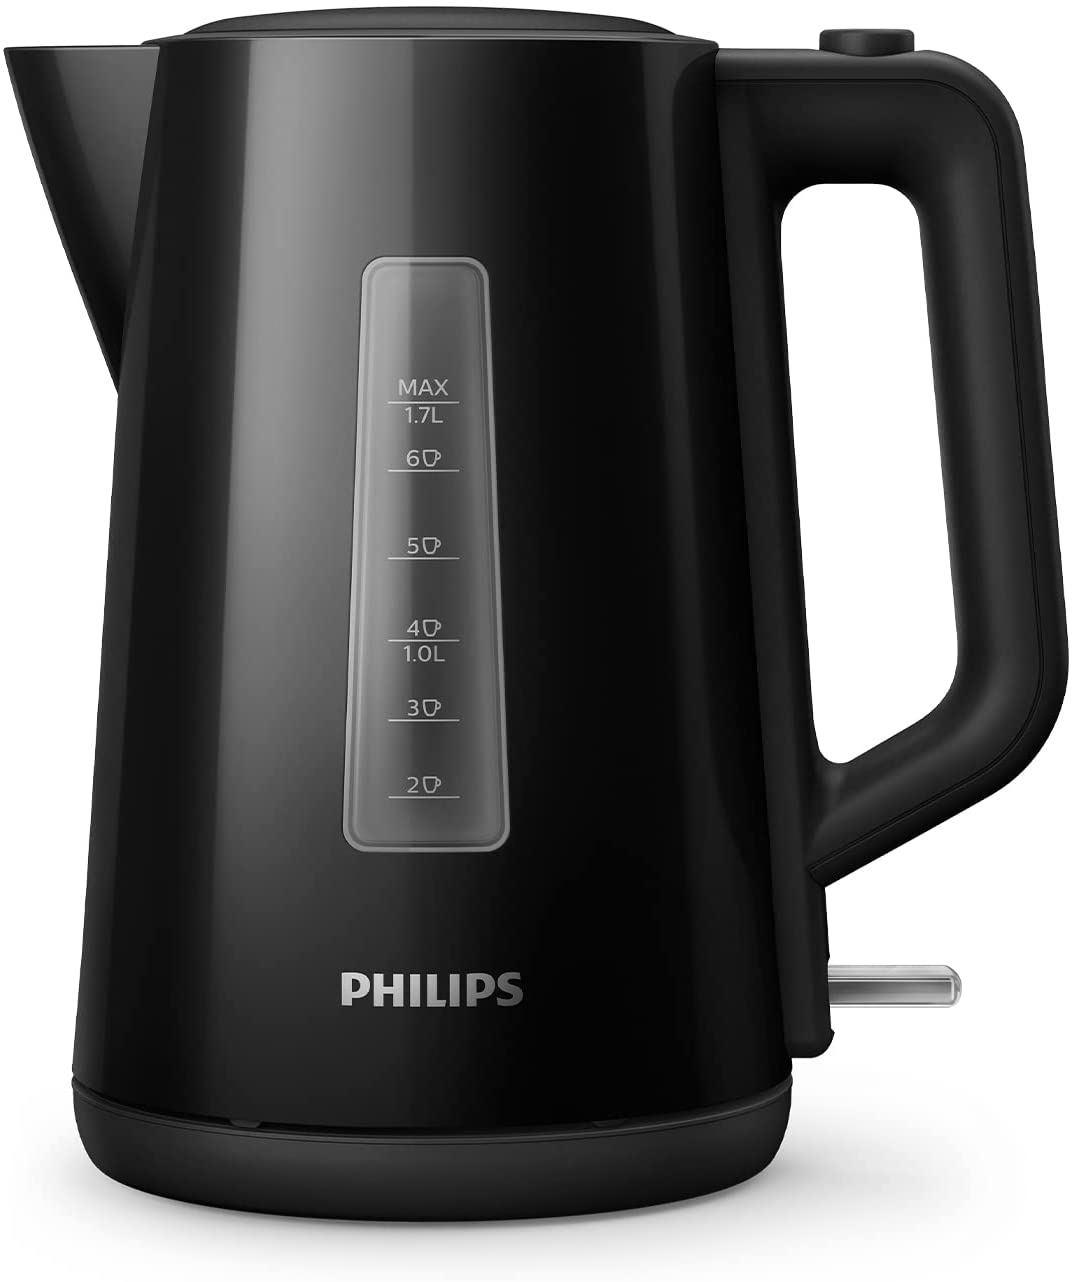 Philips Domestic Appliances Philips HD9318/20 Kettle Series 3000, Hinged Lid, Light Indicator, Black